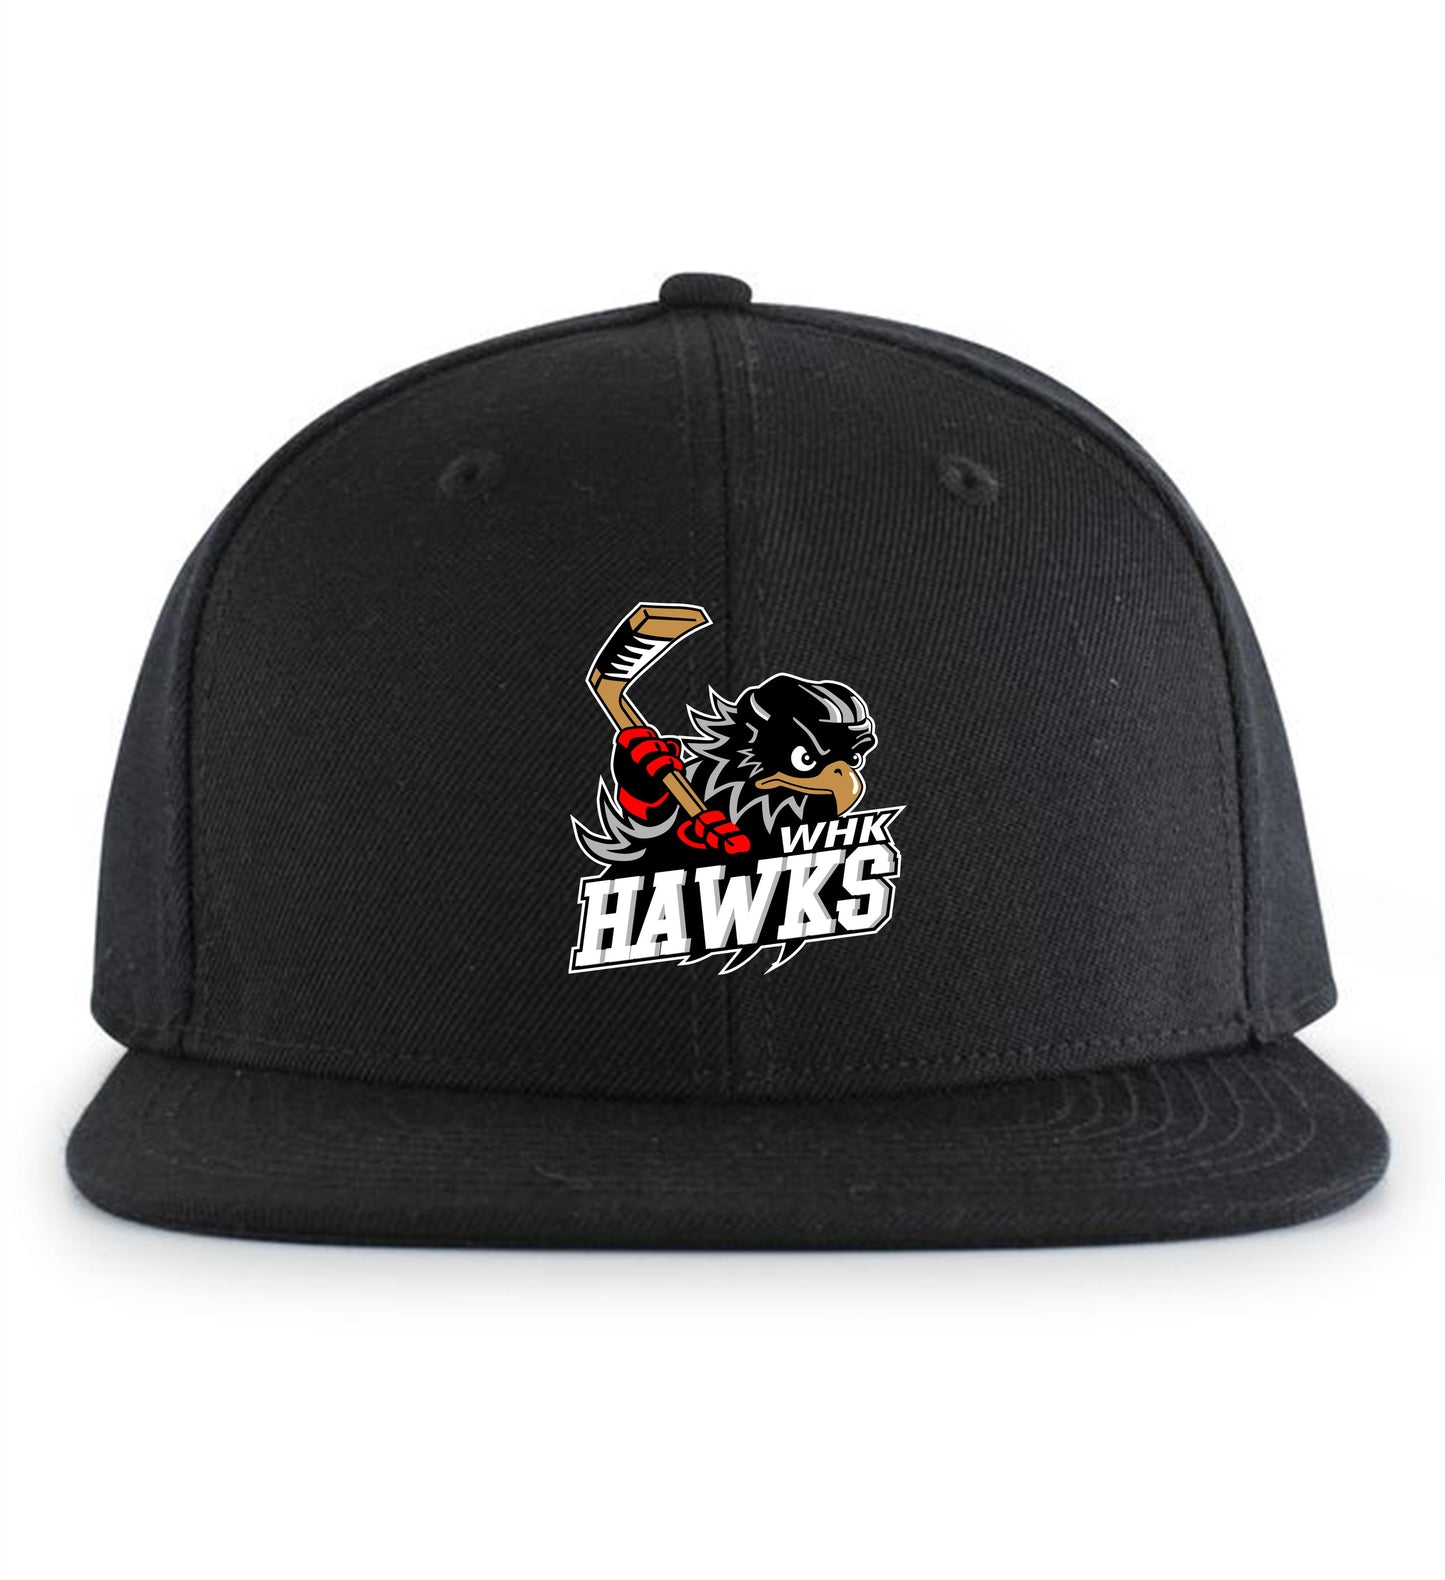 Hawks Hat